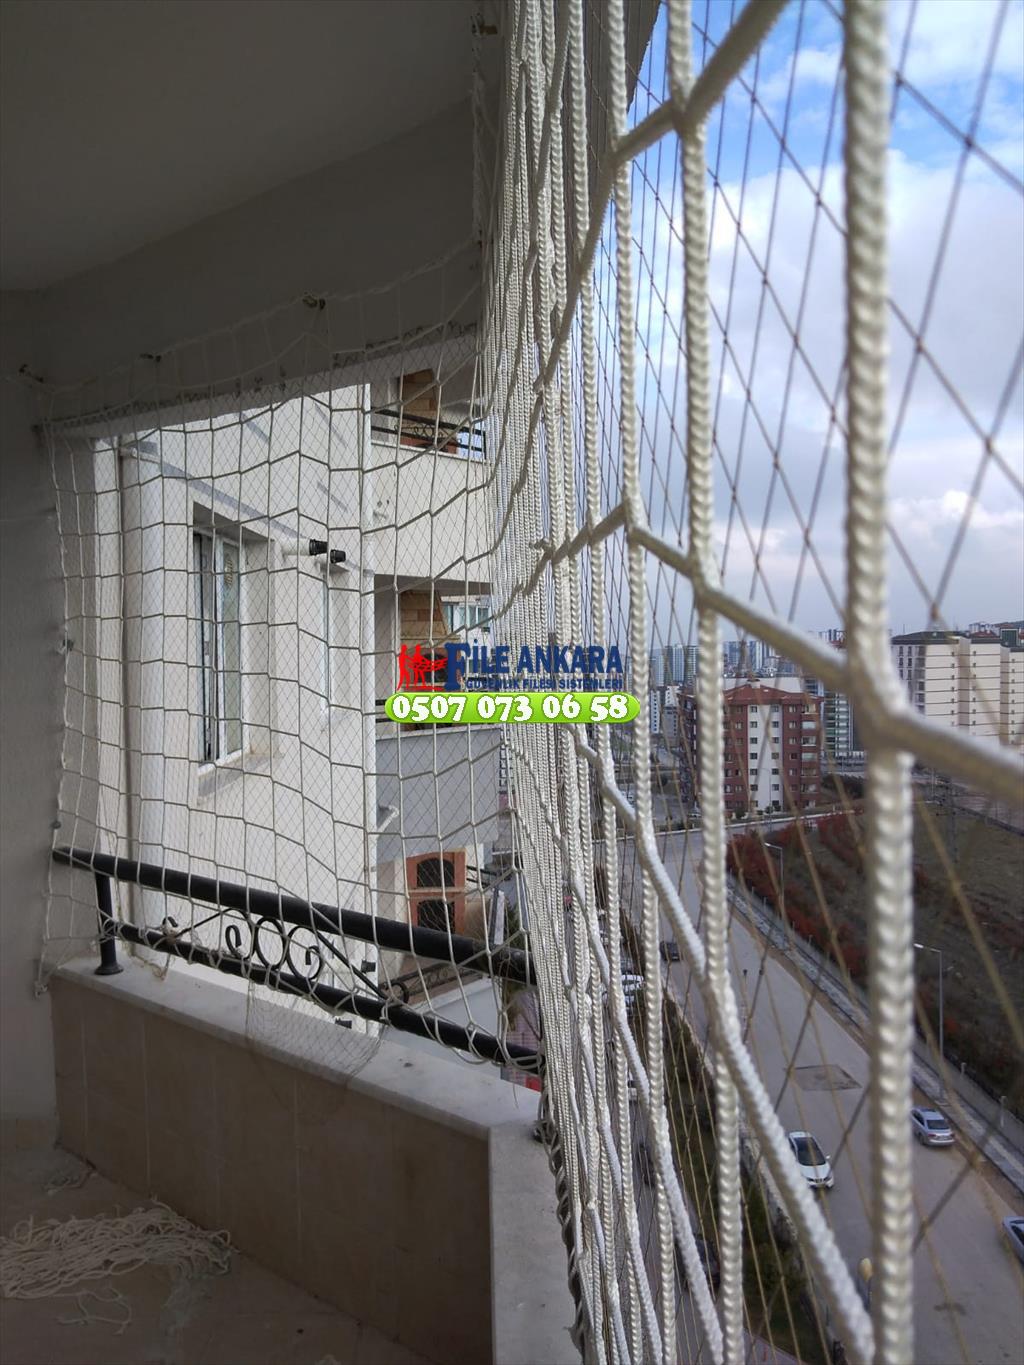 ANKARA GÜVENLİK FİLESİ - 0507 073 06 58 - FİLE ANKARA BALKON GÜVENLİK FİLESİ bağlıca balkon filesi, Balkon güvenlik filesi